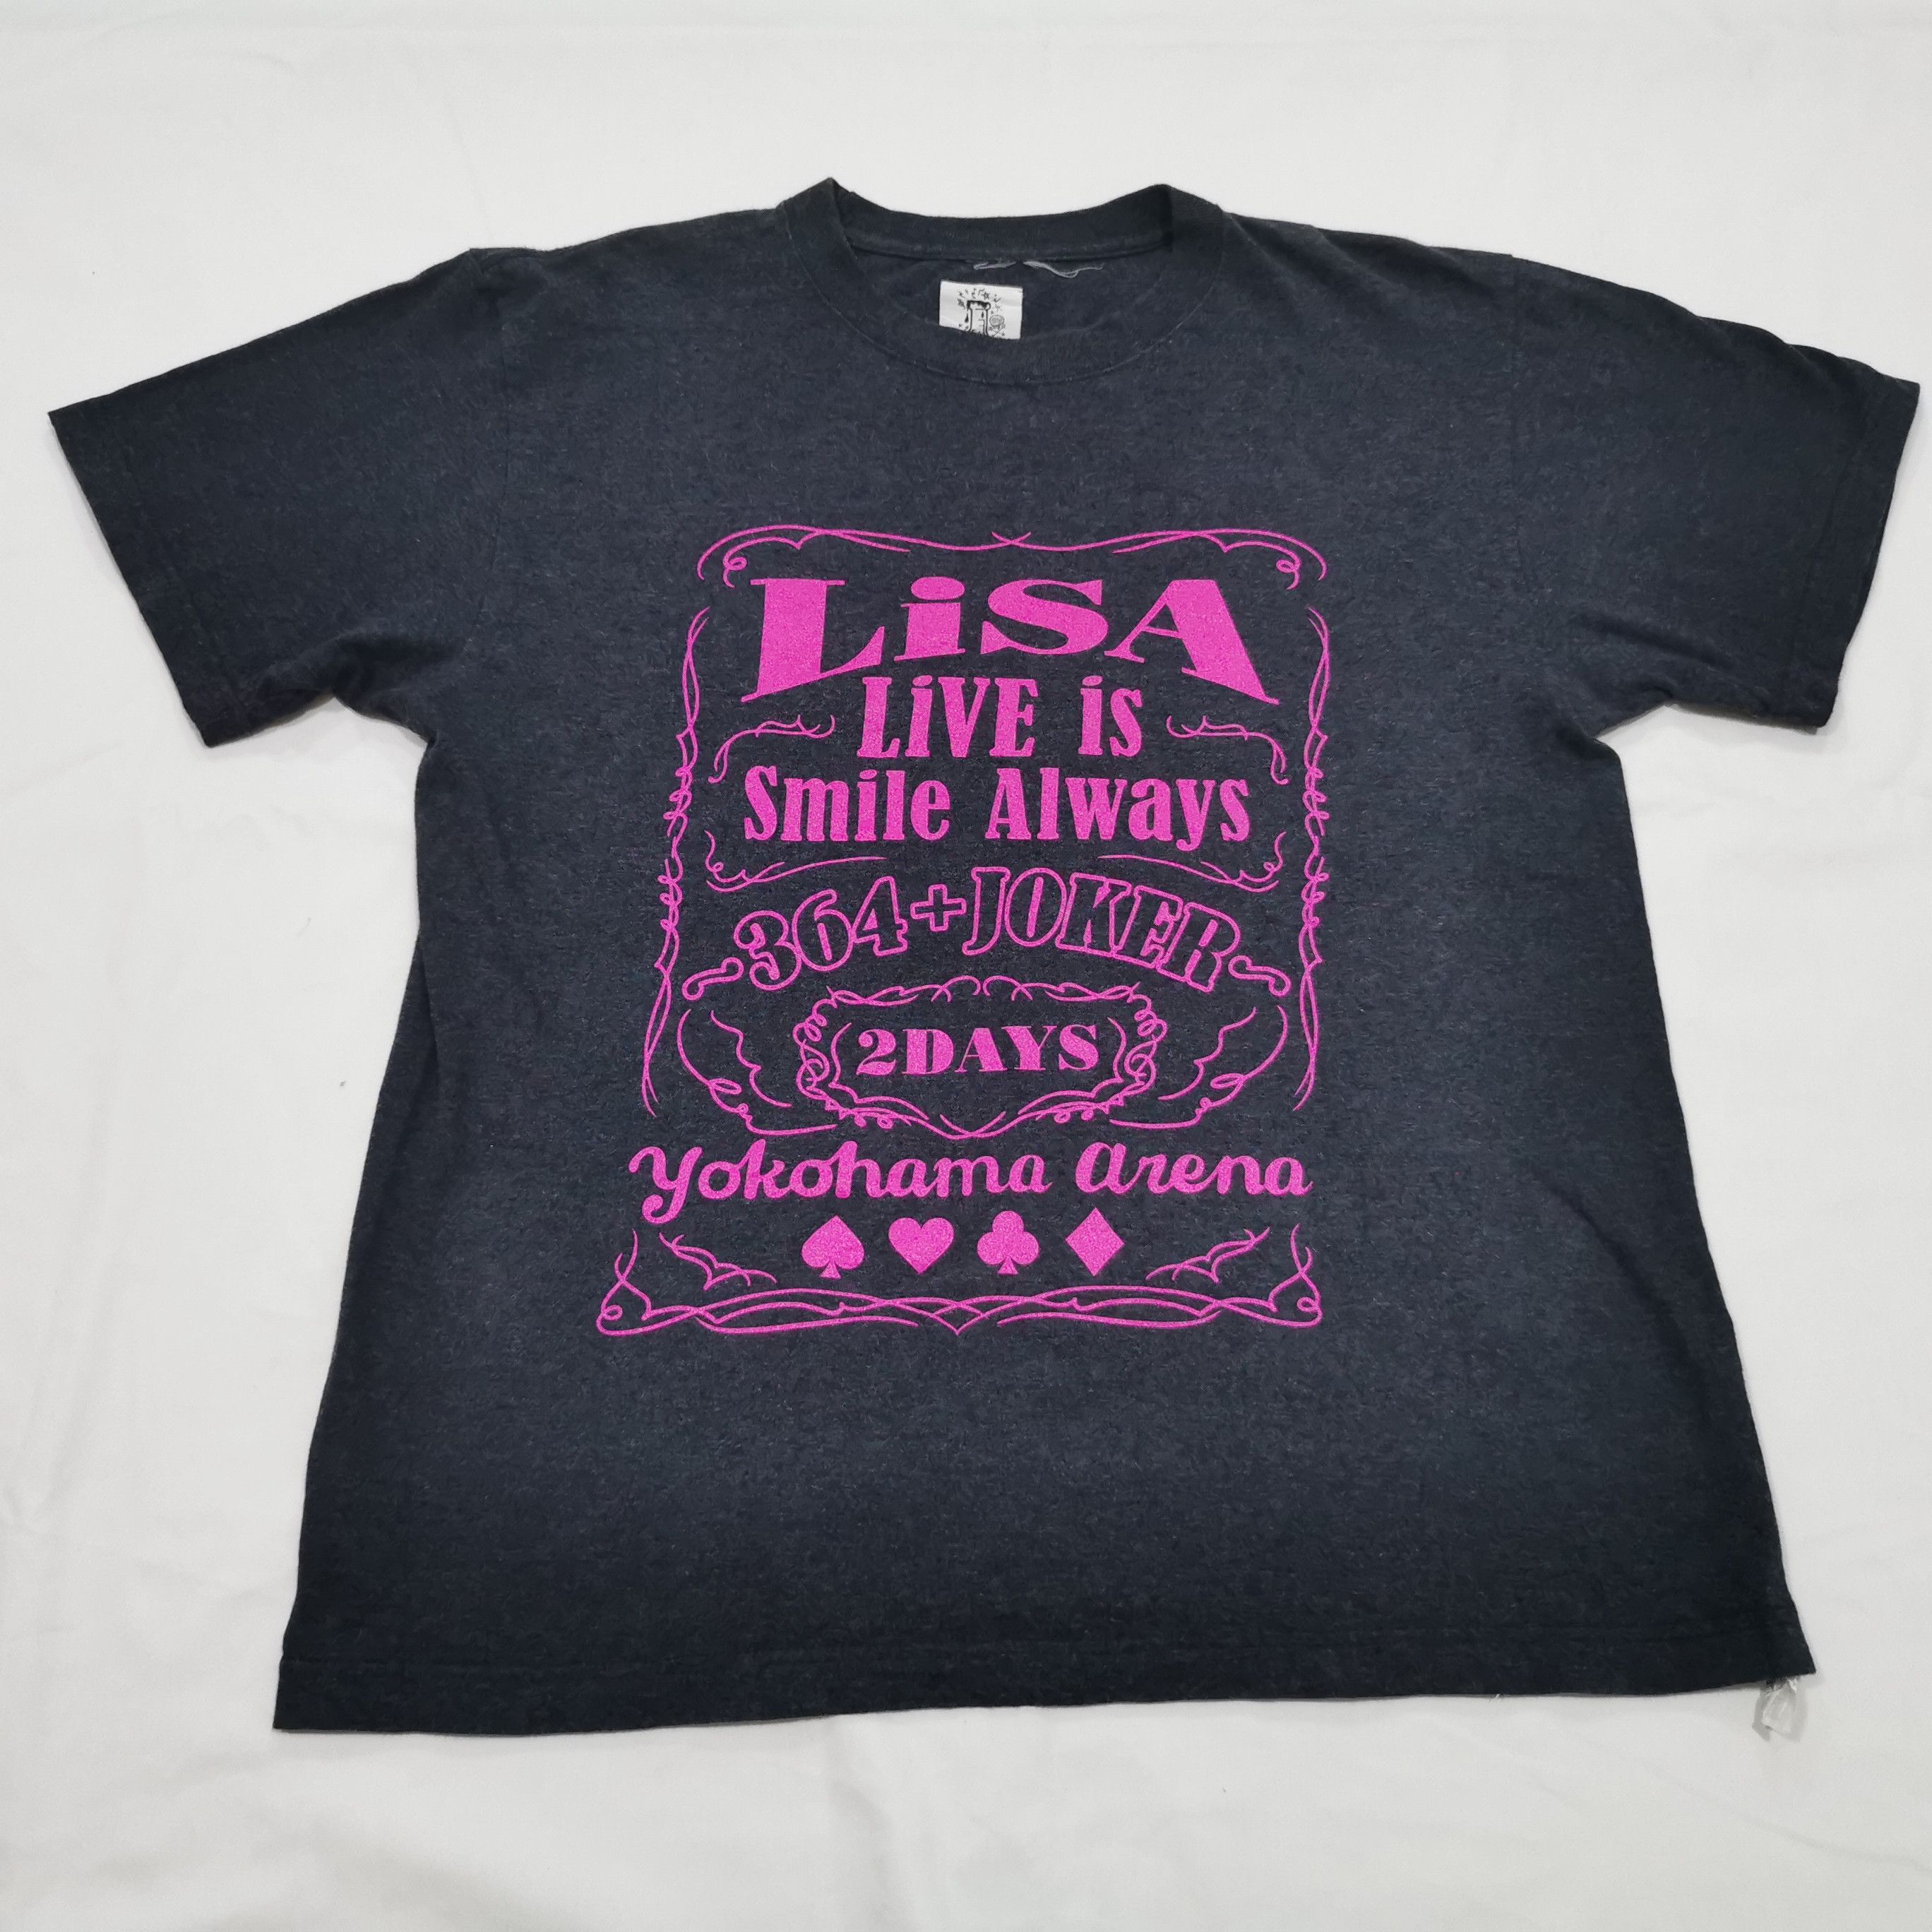 Japanese Brand - LiSA Live is Smile Always in Yokohama Arena Tshirt - 1